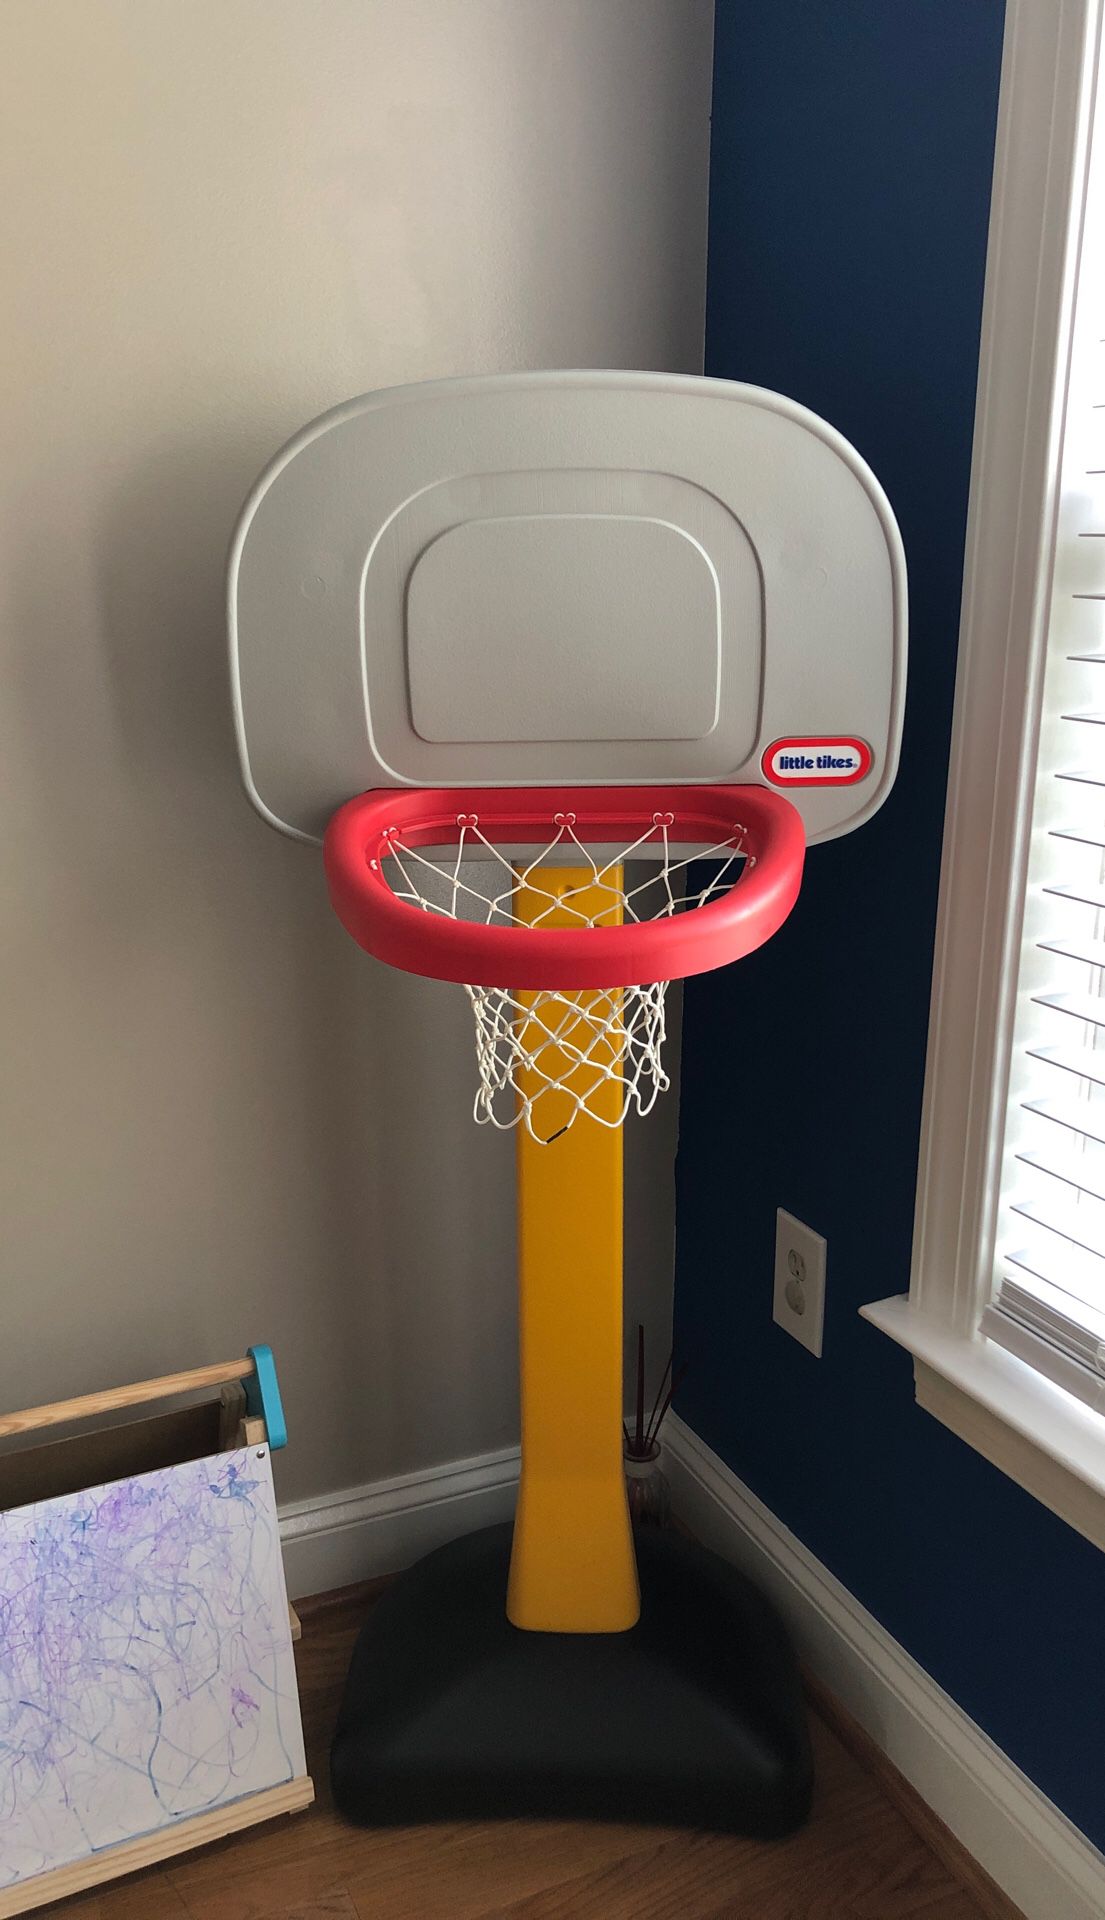 Basketball court mini ( little tikes )